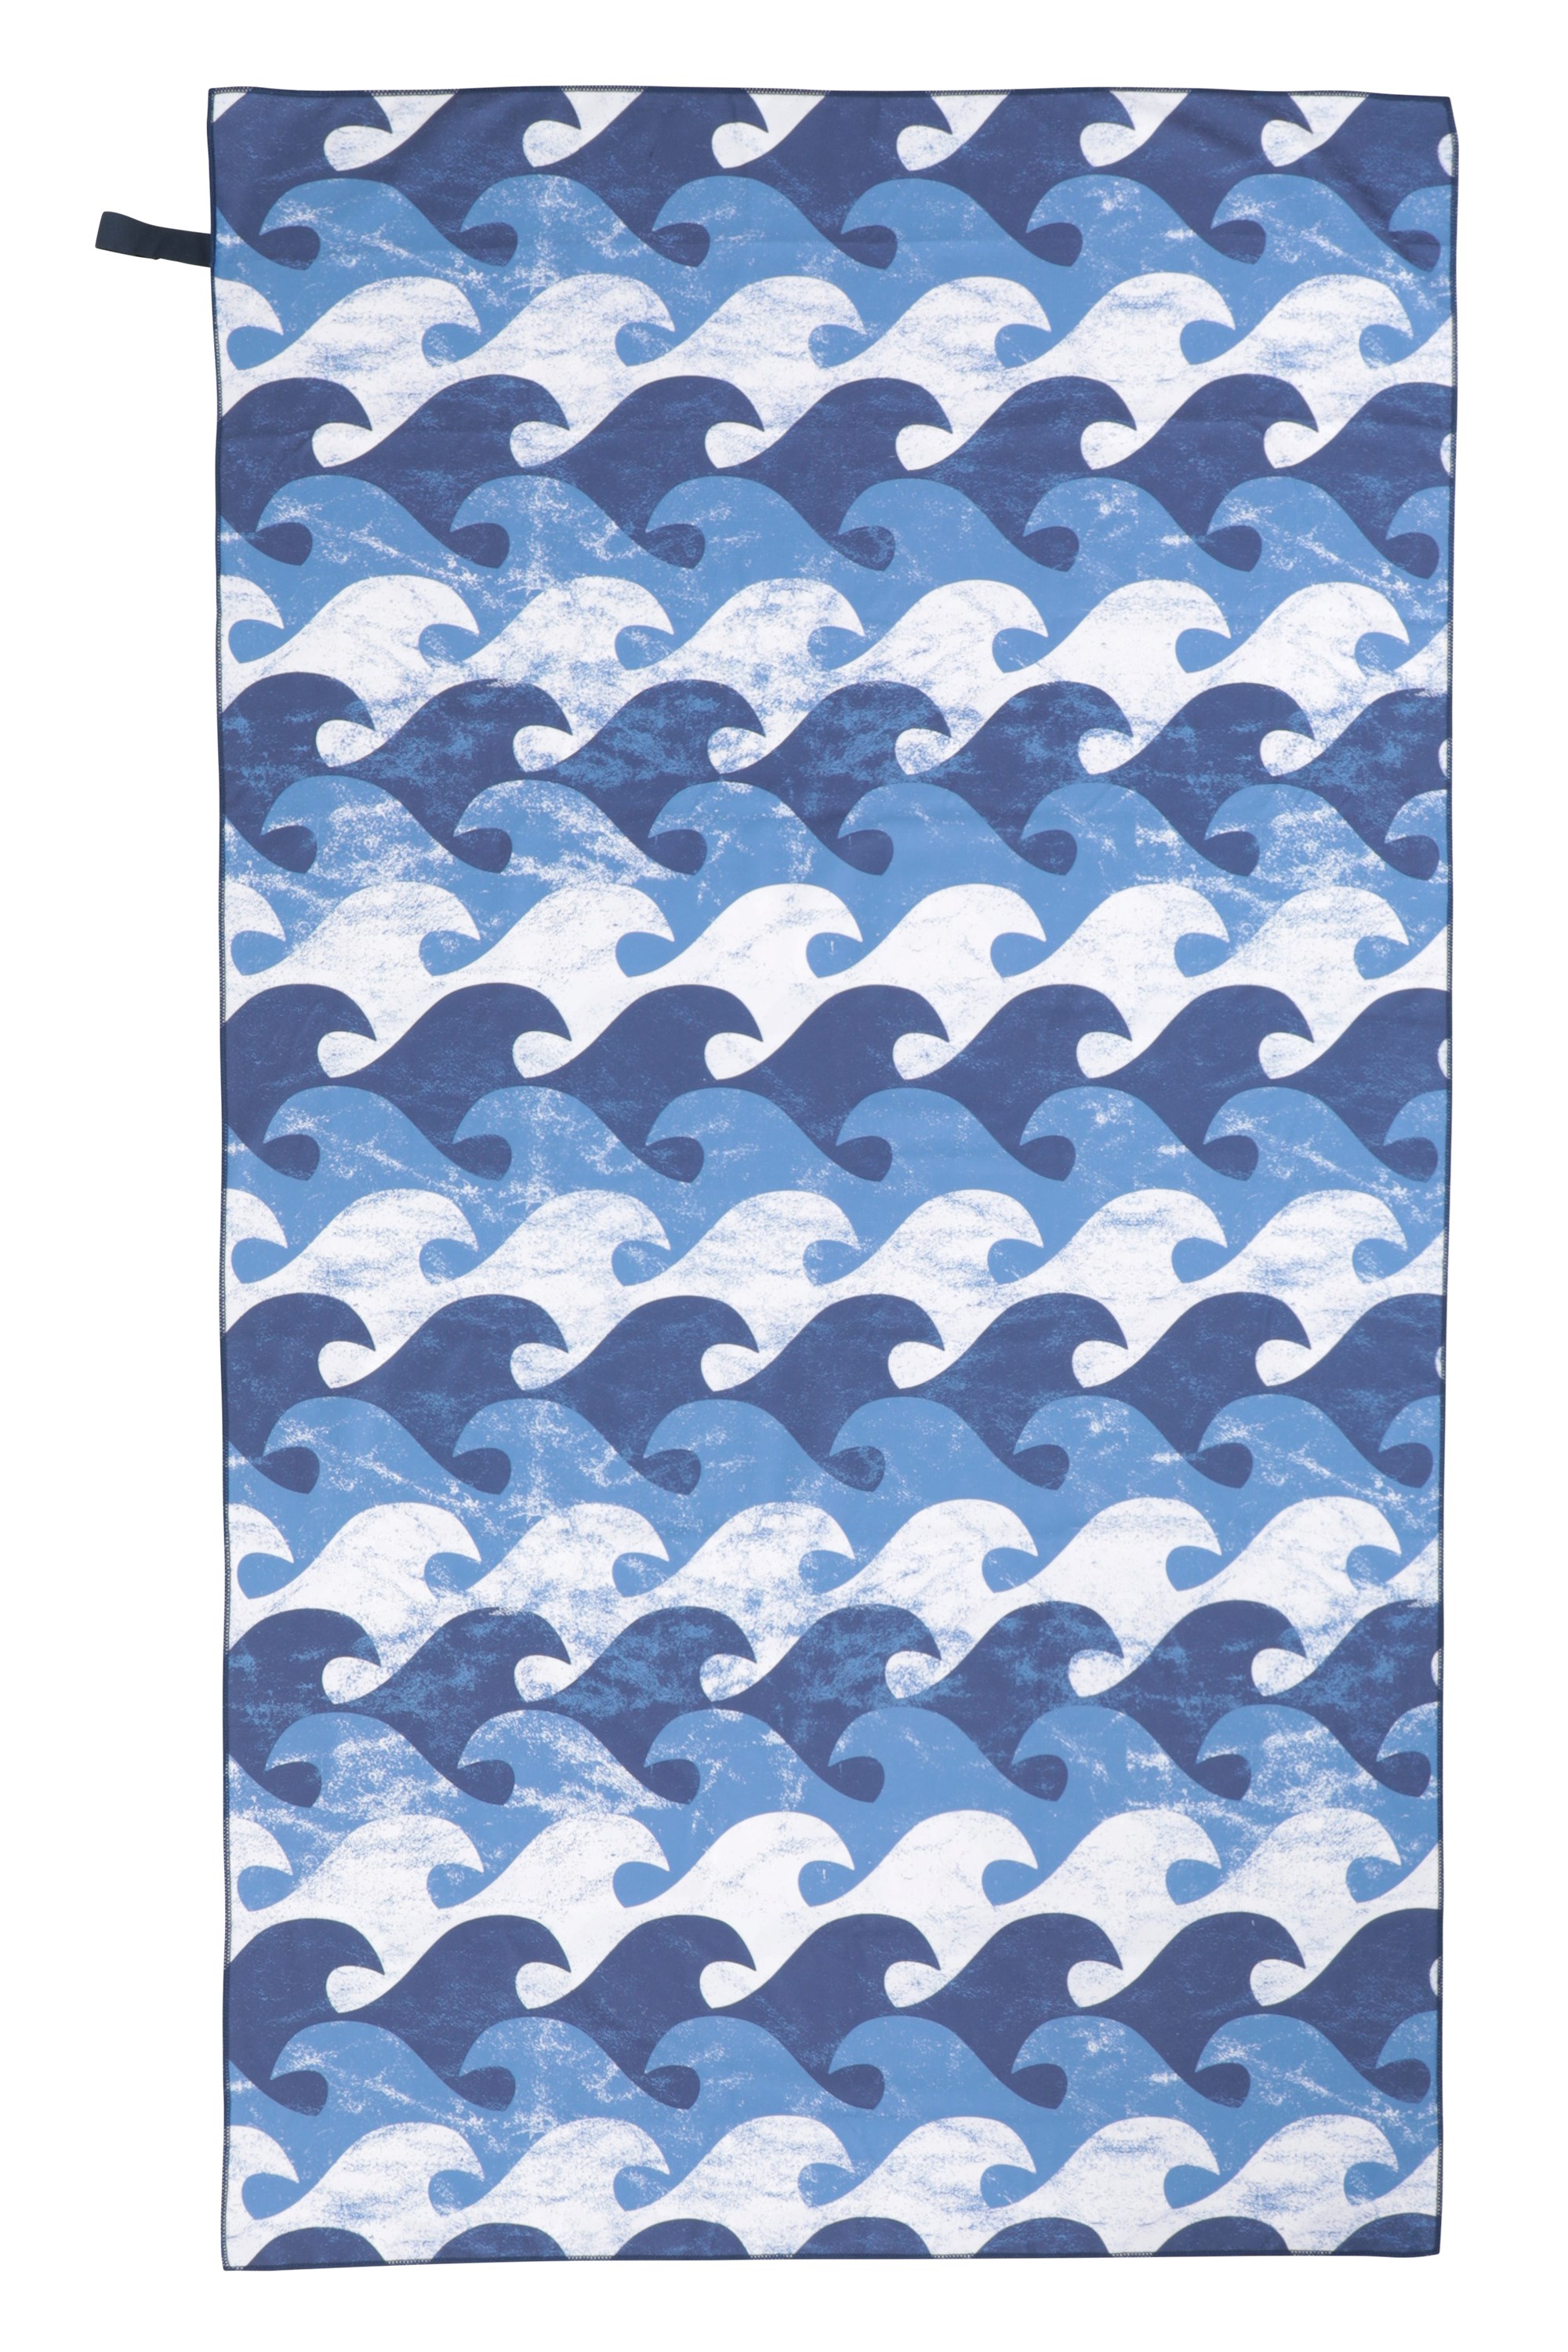 Printed Microfibre Towel - Giant - 150 X 85cm - Dark Blue